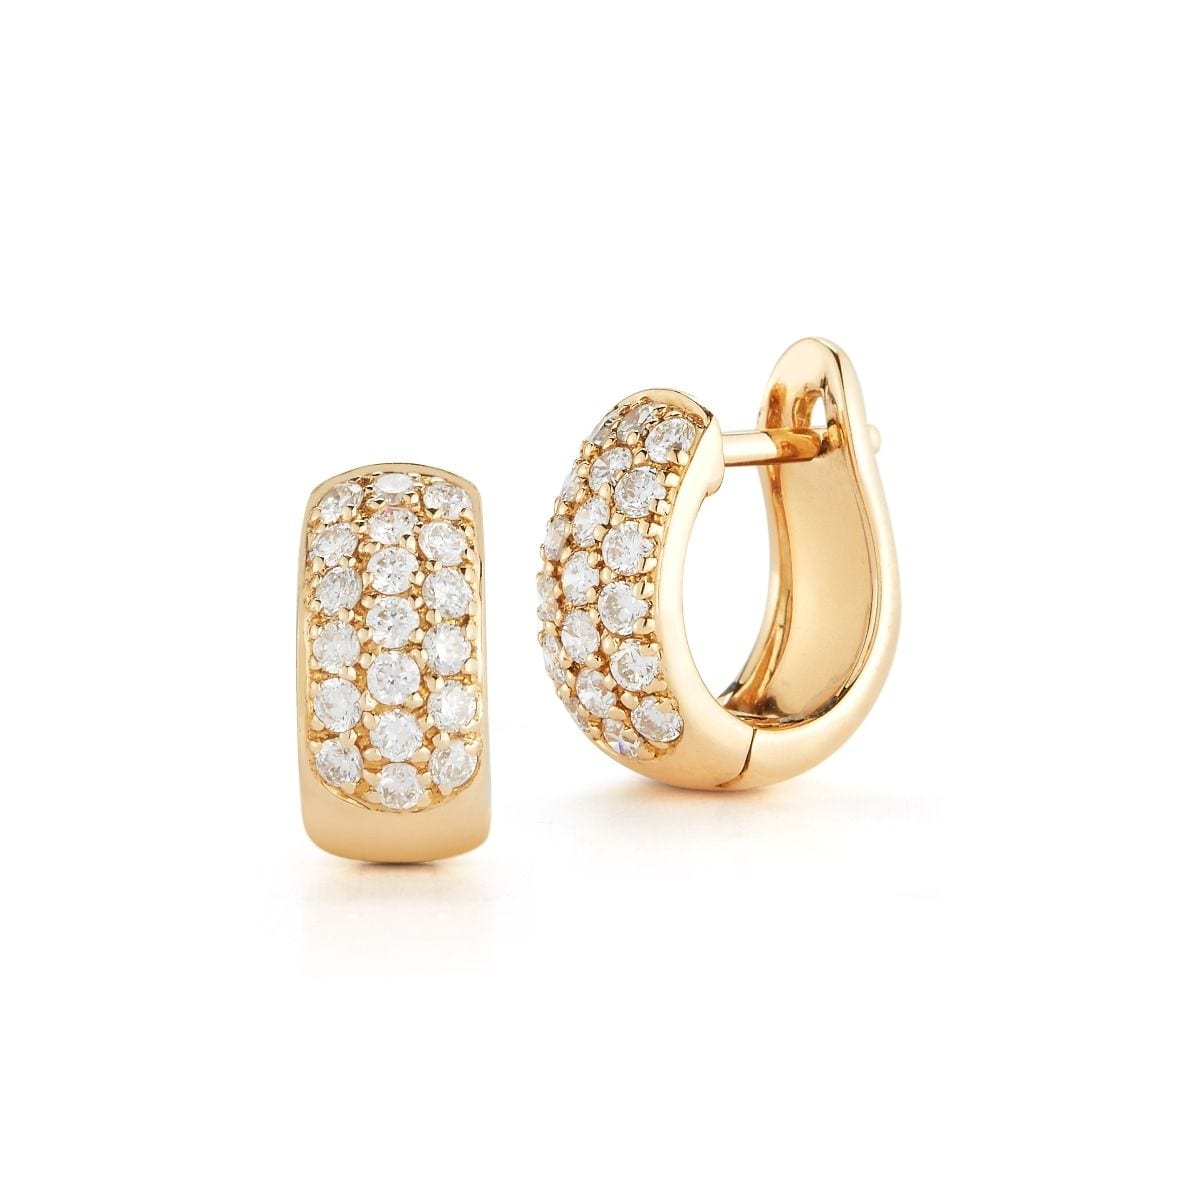 Vincents Fine Jewelry | Dana Rebecca Designs | DRD Diamond Huggie Earrings